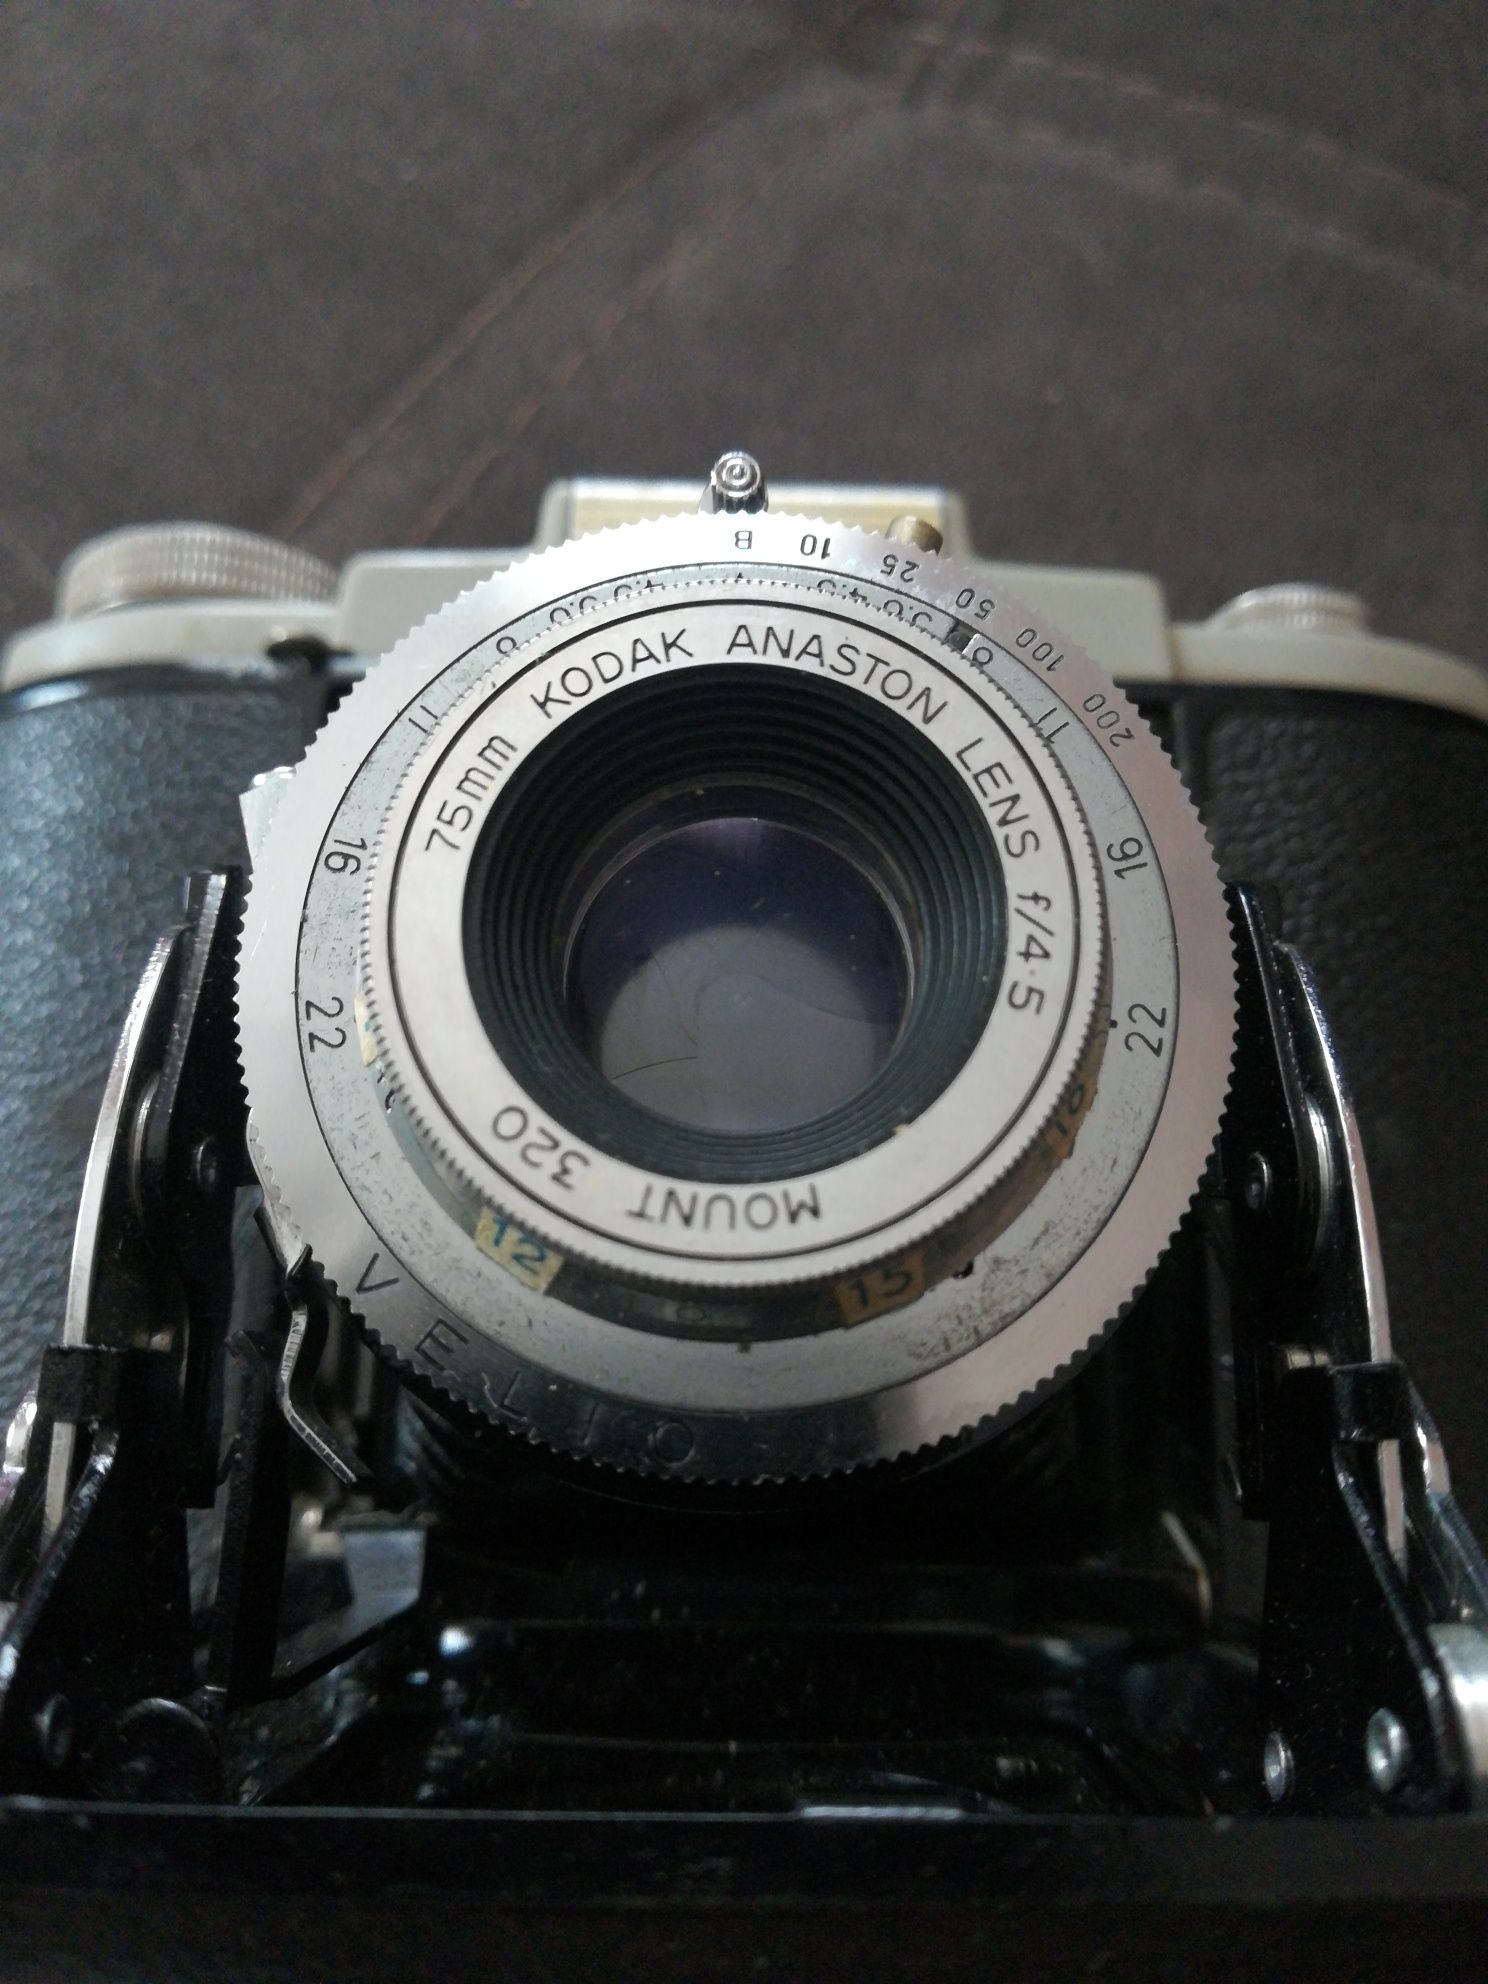 Aparat kolekcjonerski Kodak 66 model lll